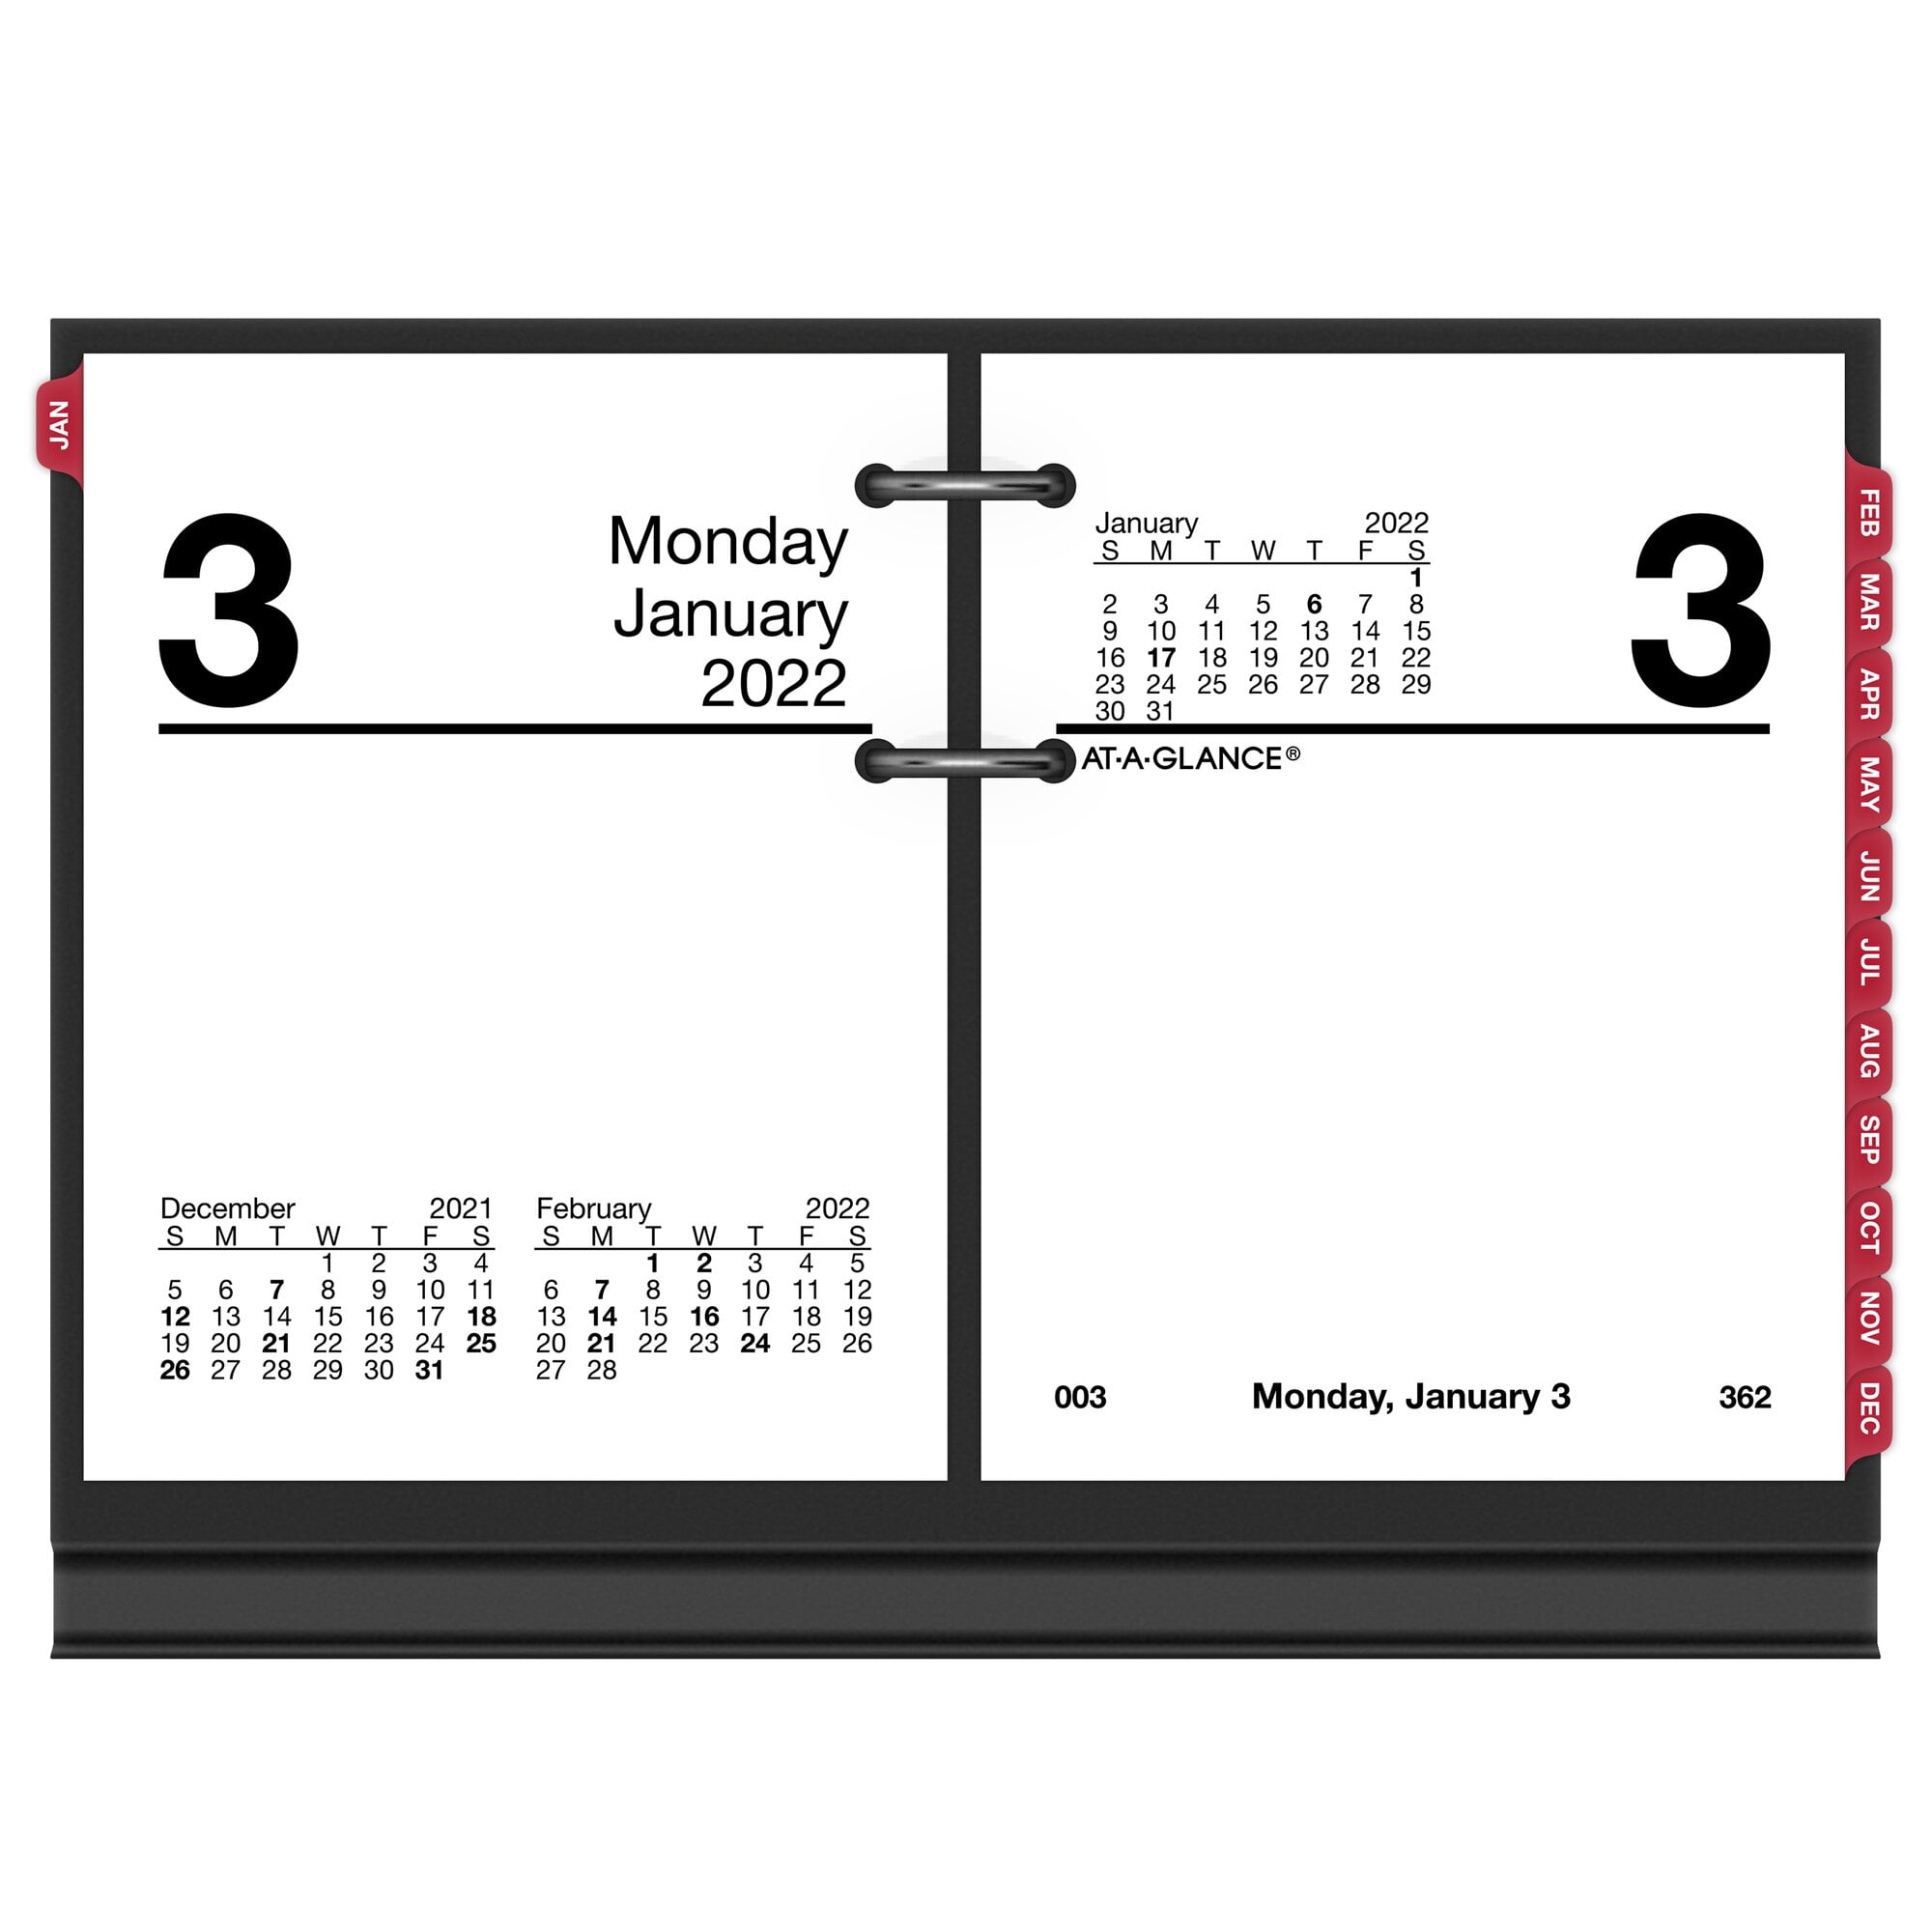 at-a-glance-2022-3-75-x-3-daily-calendar-refill-compact-white-black-e919-50-22-walmart